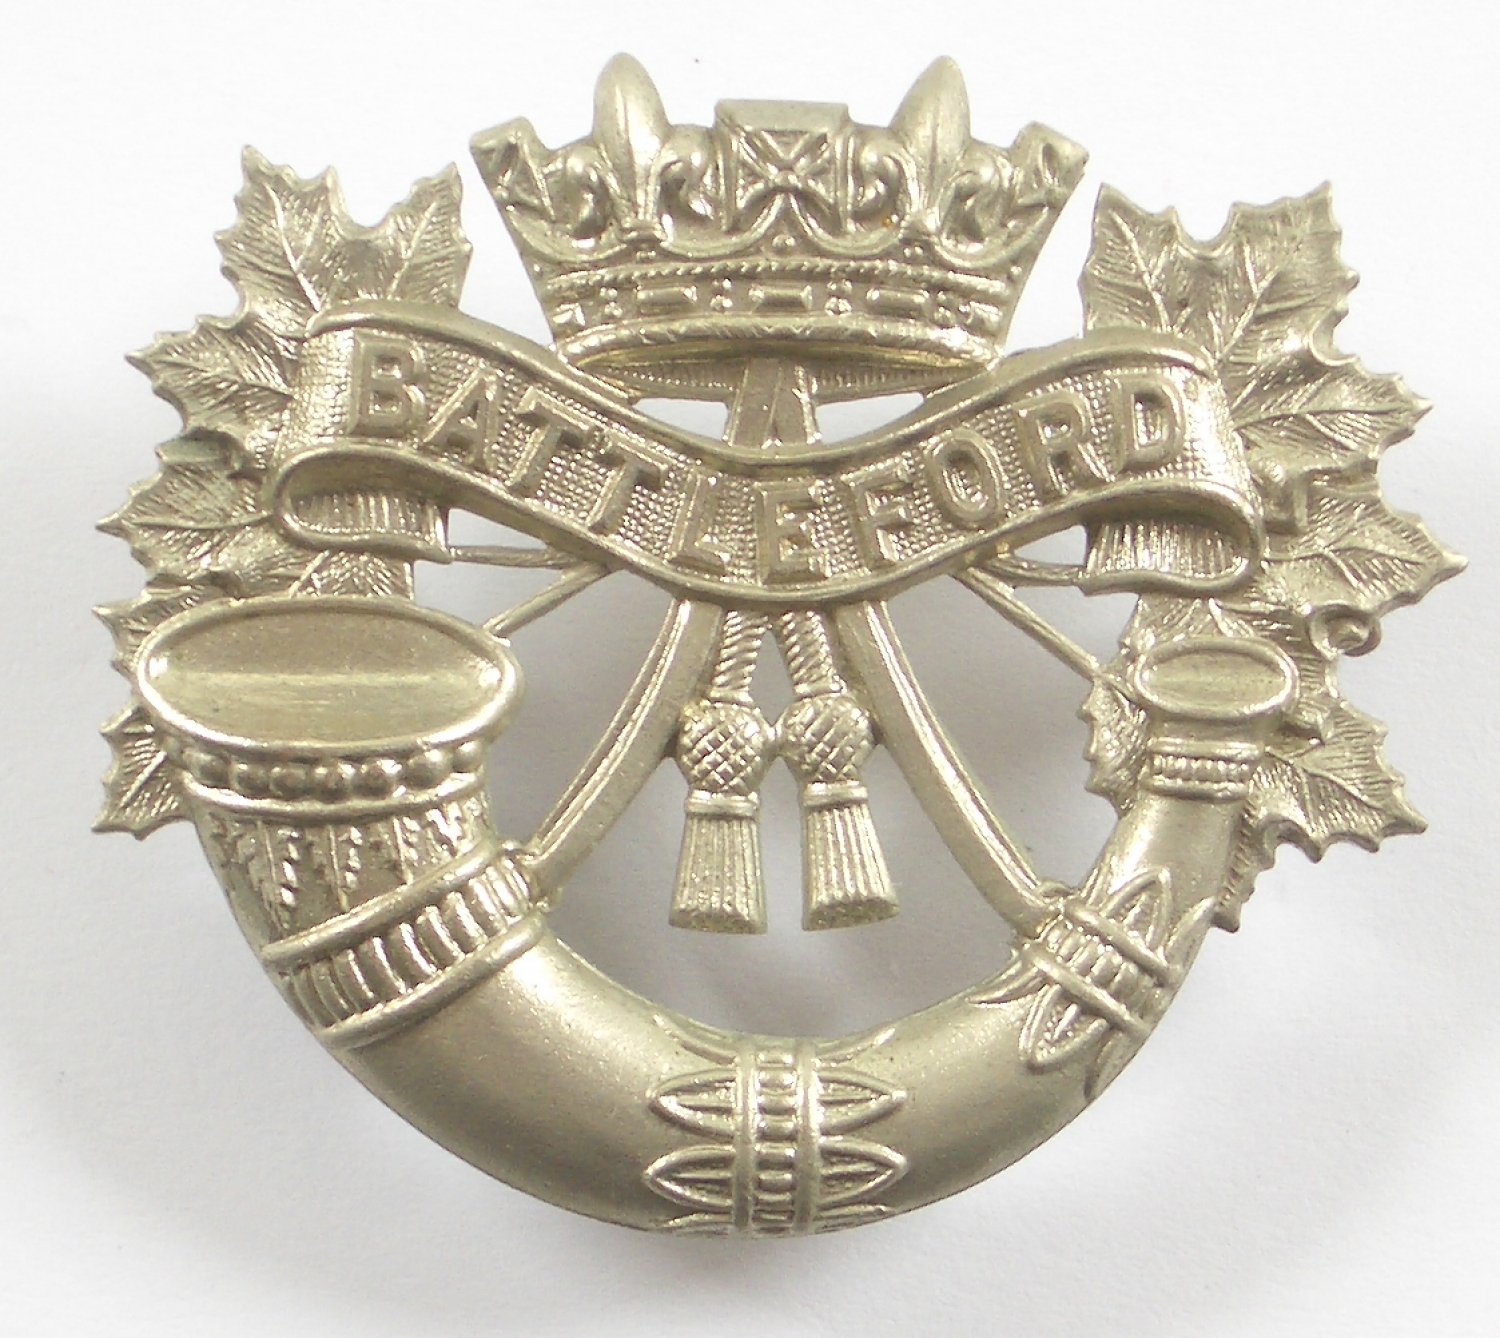 Canadian Battleford Light Infantry cap badge